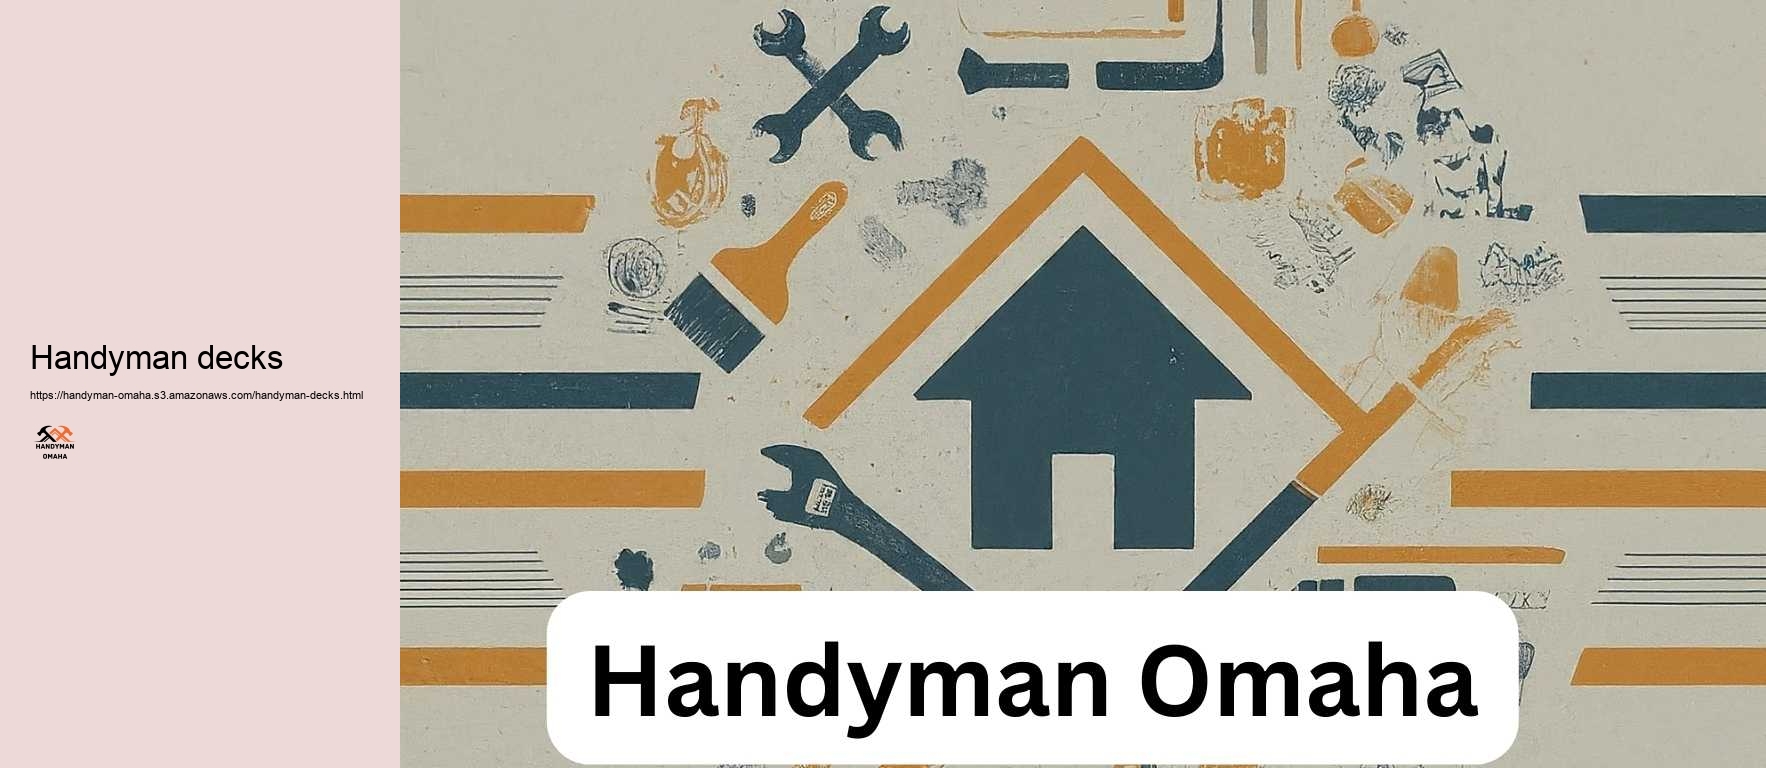 Handyman decks